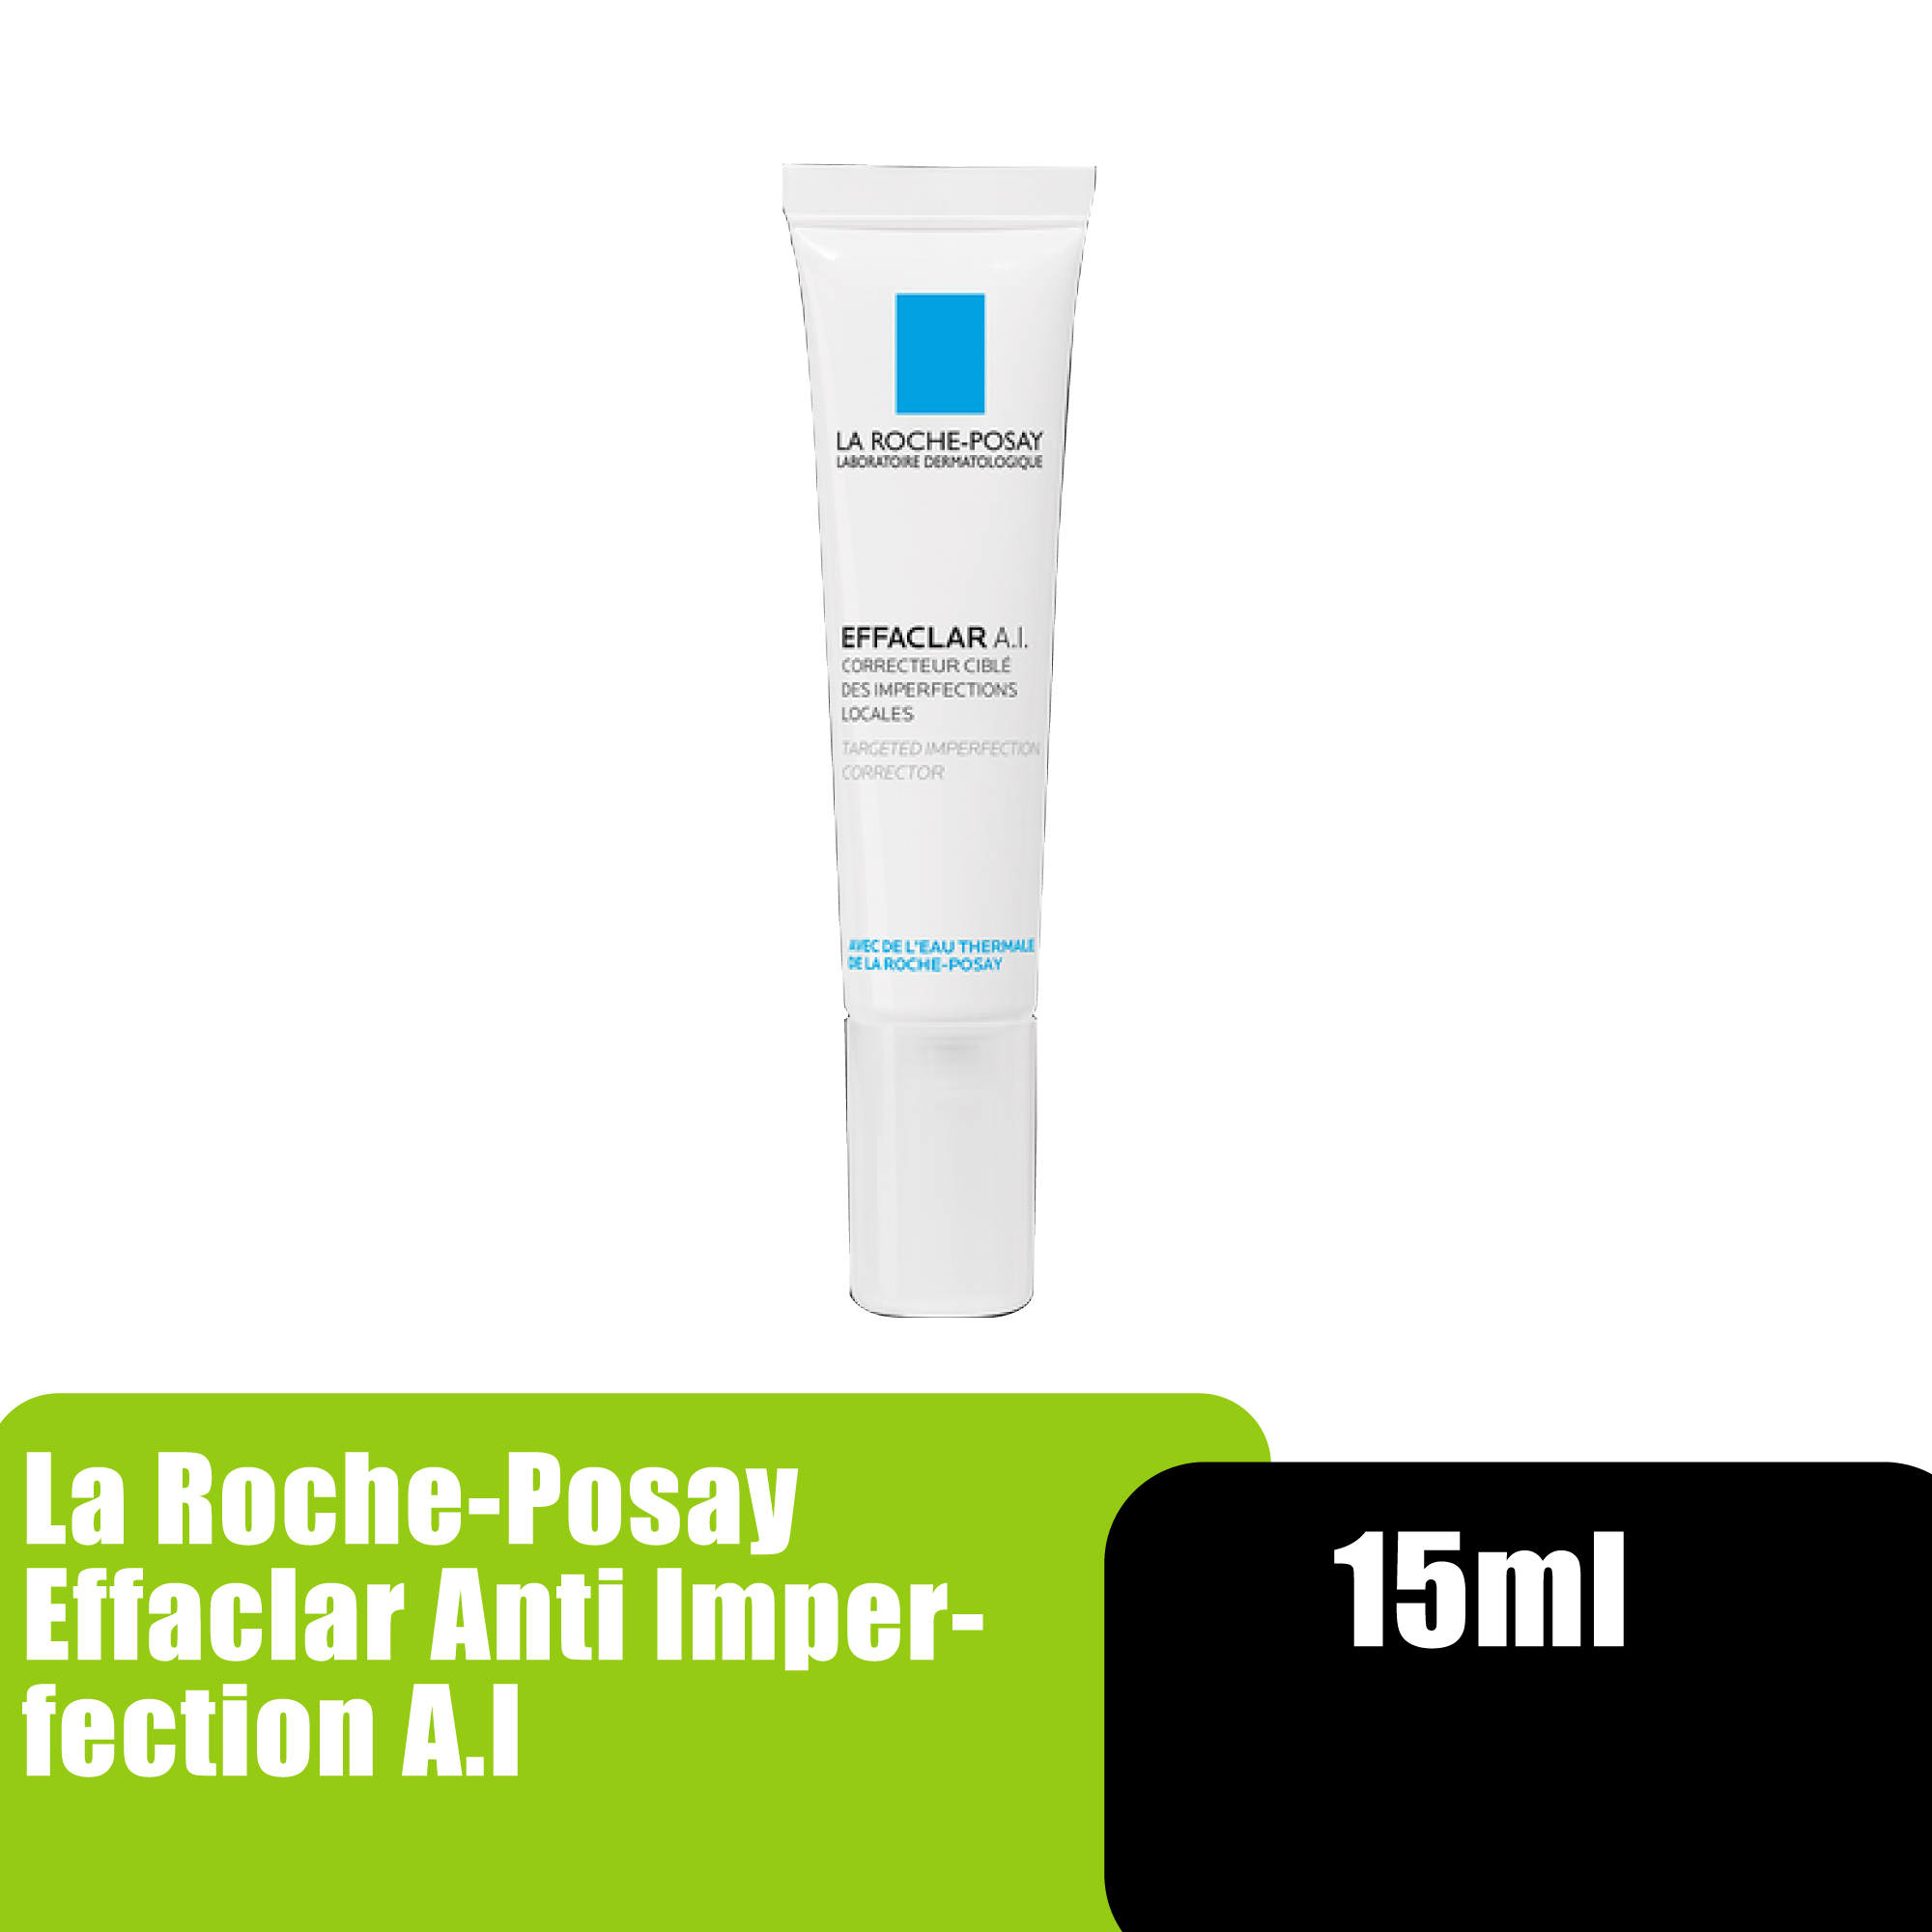 La Roche Posay Effaclar Anti-Imperfection A.I Corrector 15ml (Before Makeup)